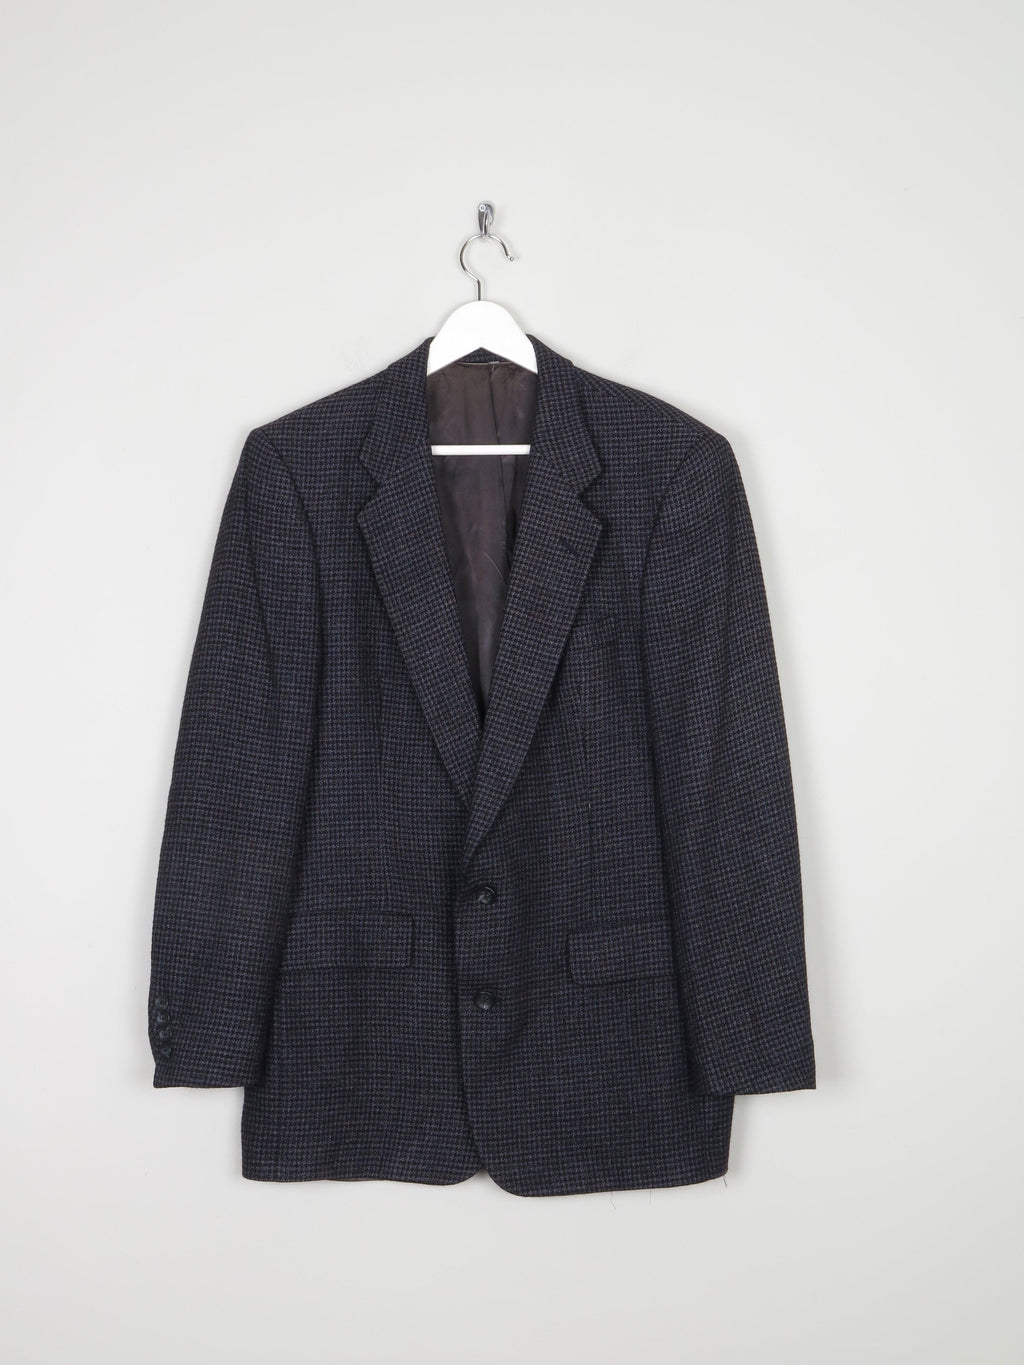 Men's Christian Dior Monsieur Navy Tweed Jacket 42" L - The Harlequin